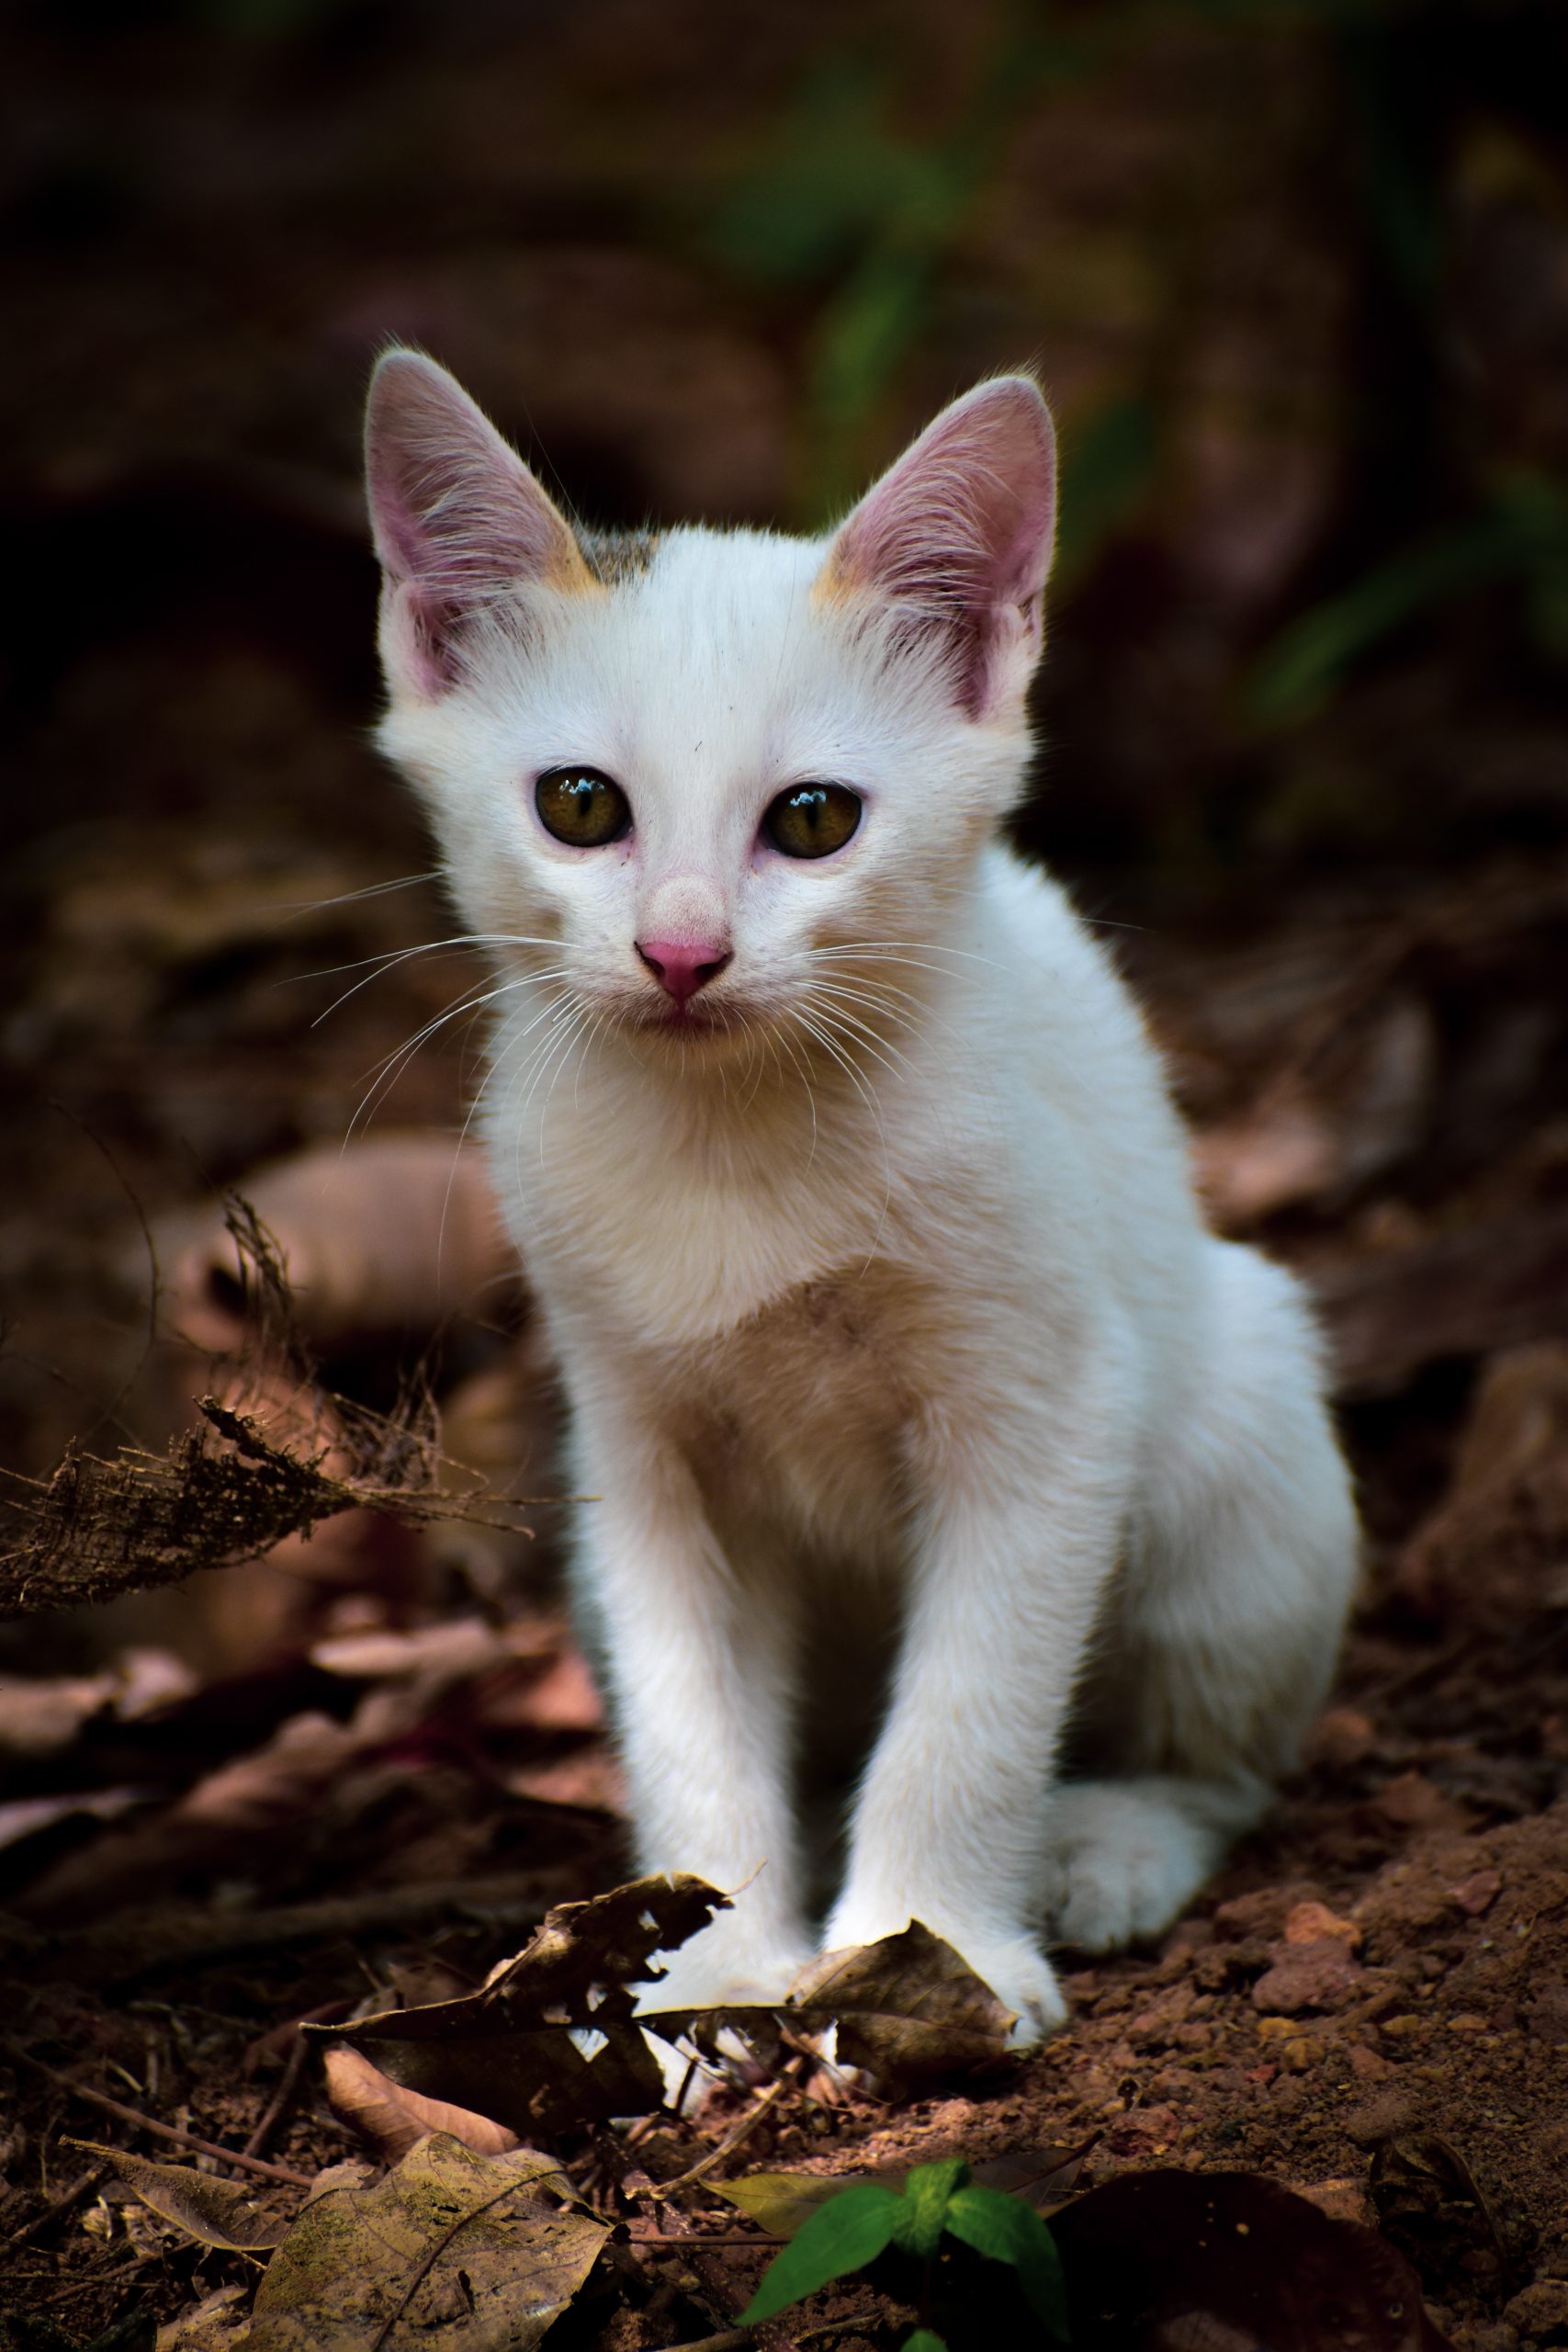 A white kitten